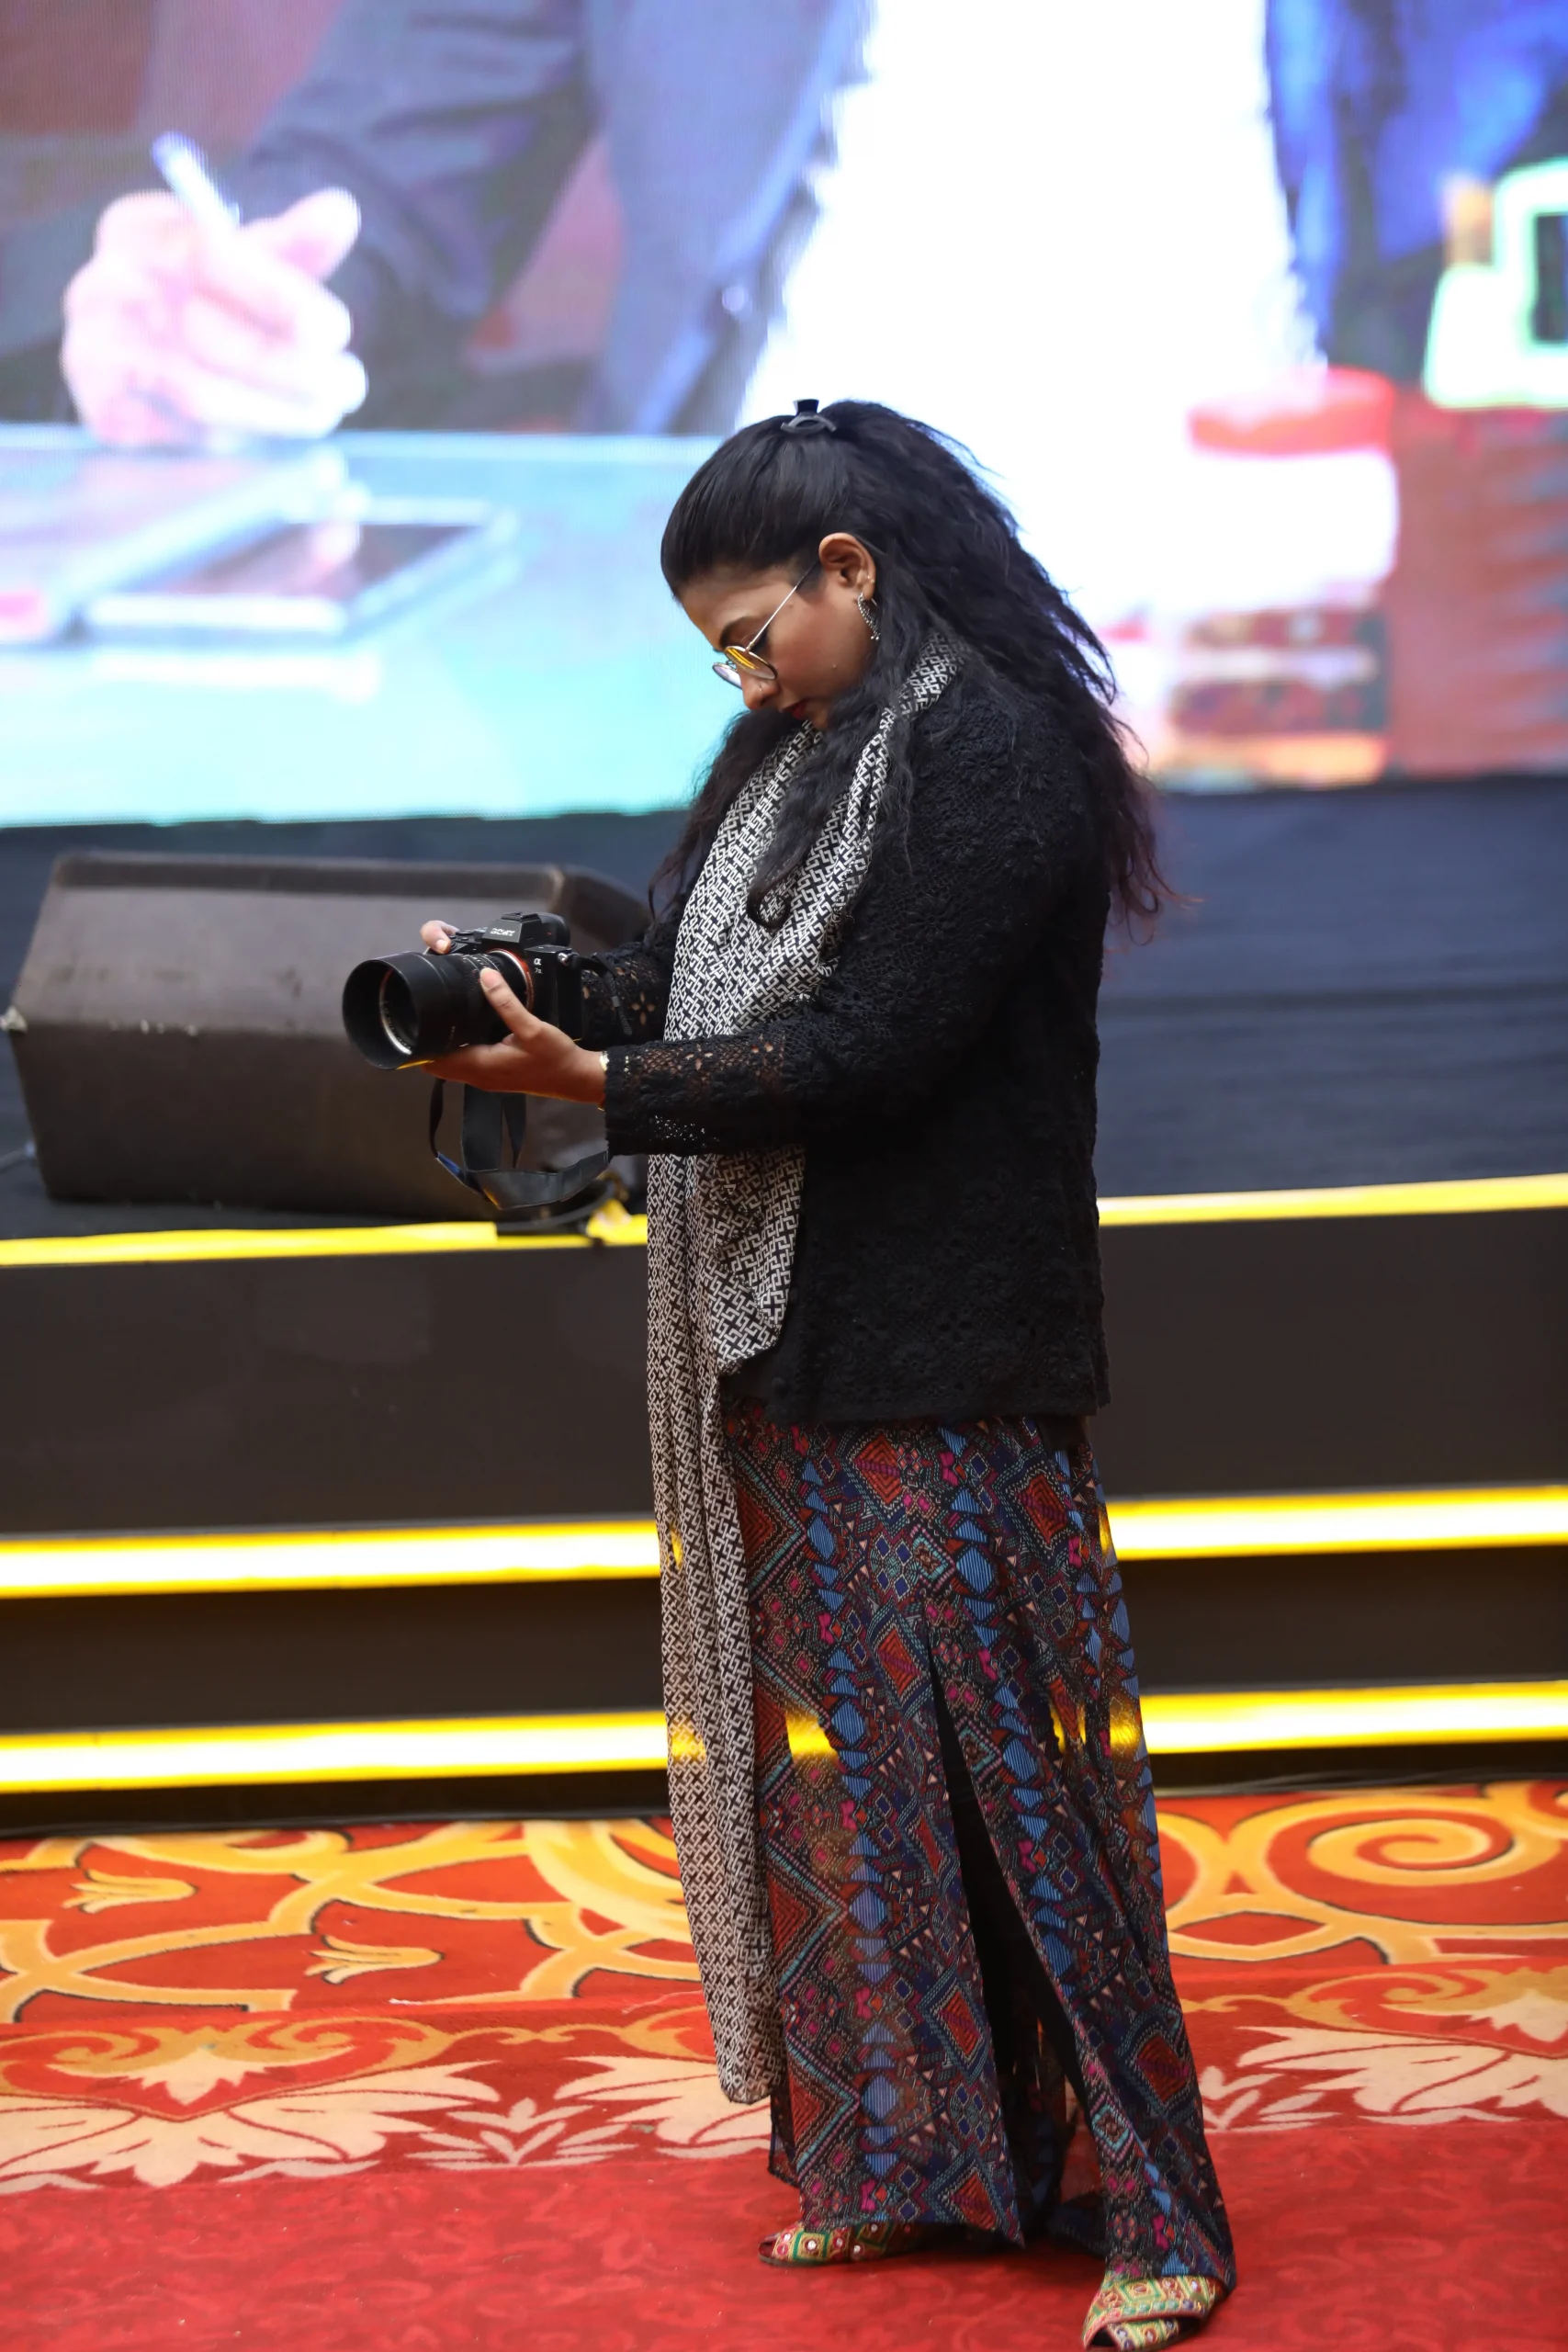 Female Photographer in Karachi